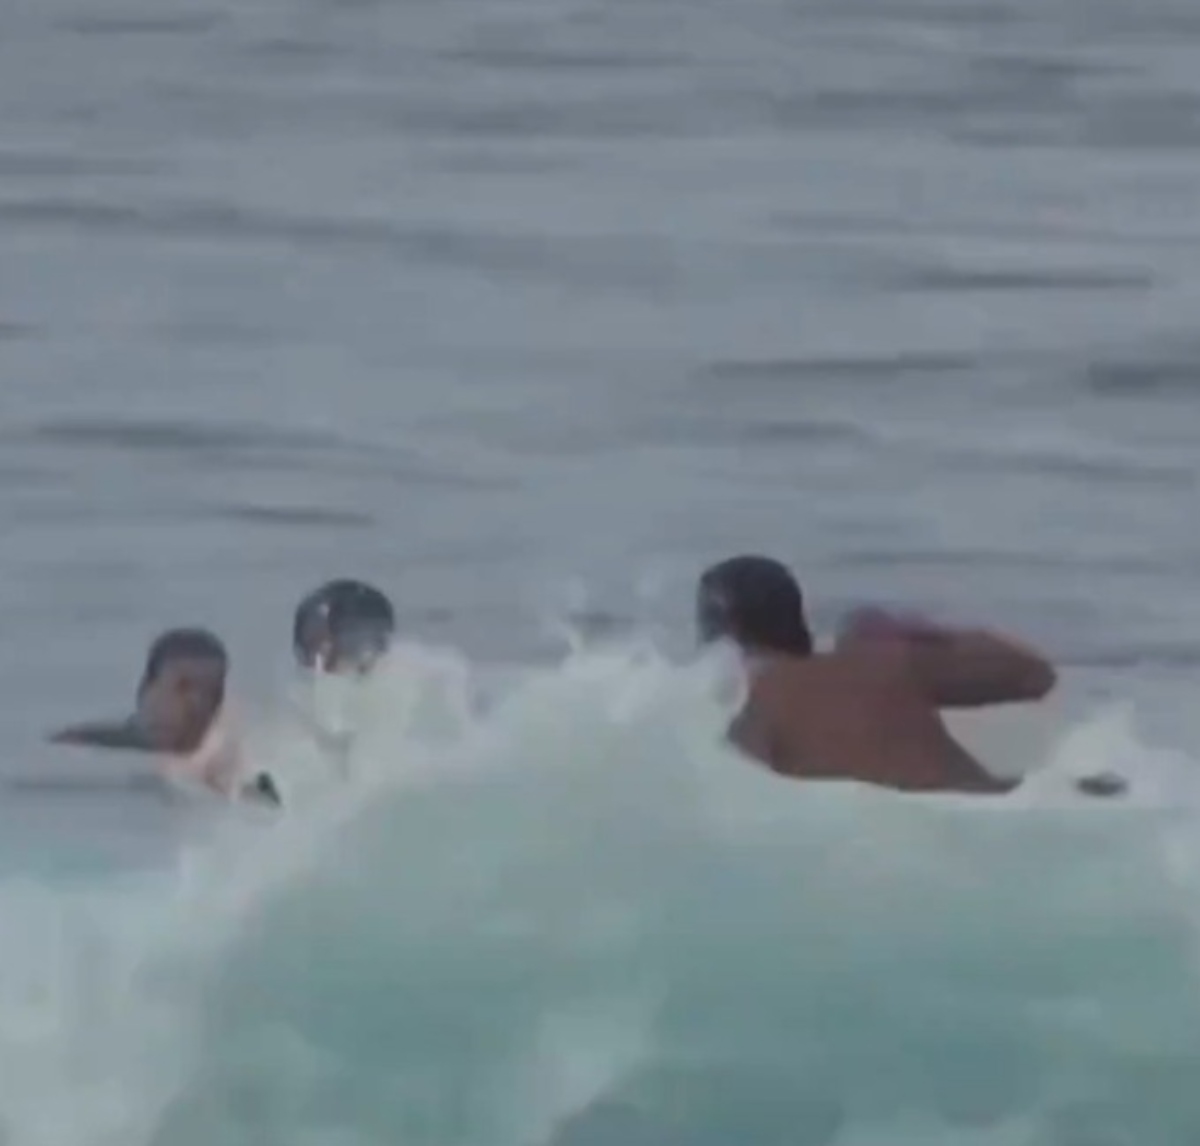  VÍDEO: Surfista brasileiro agride atleta durante disputa por ondas. 